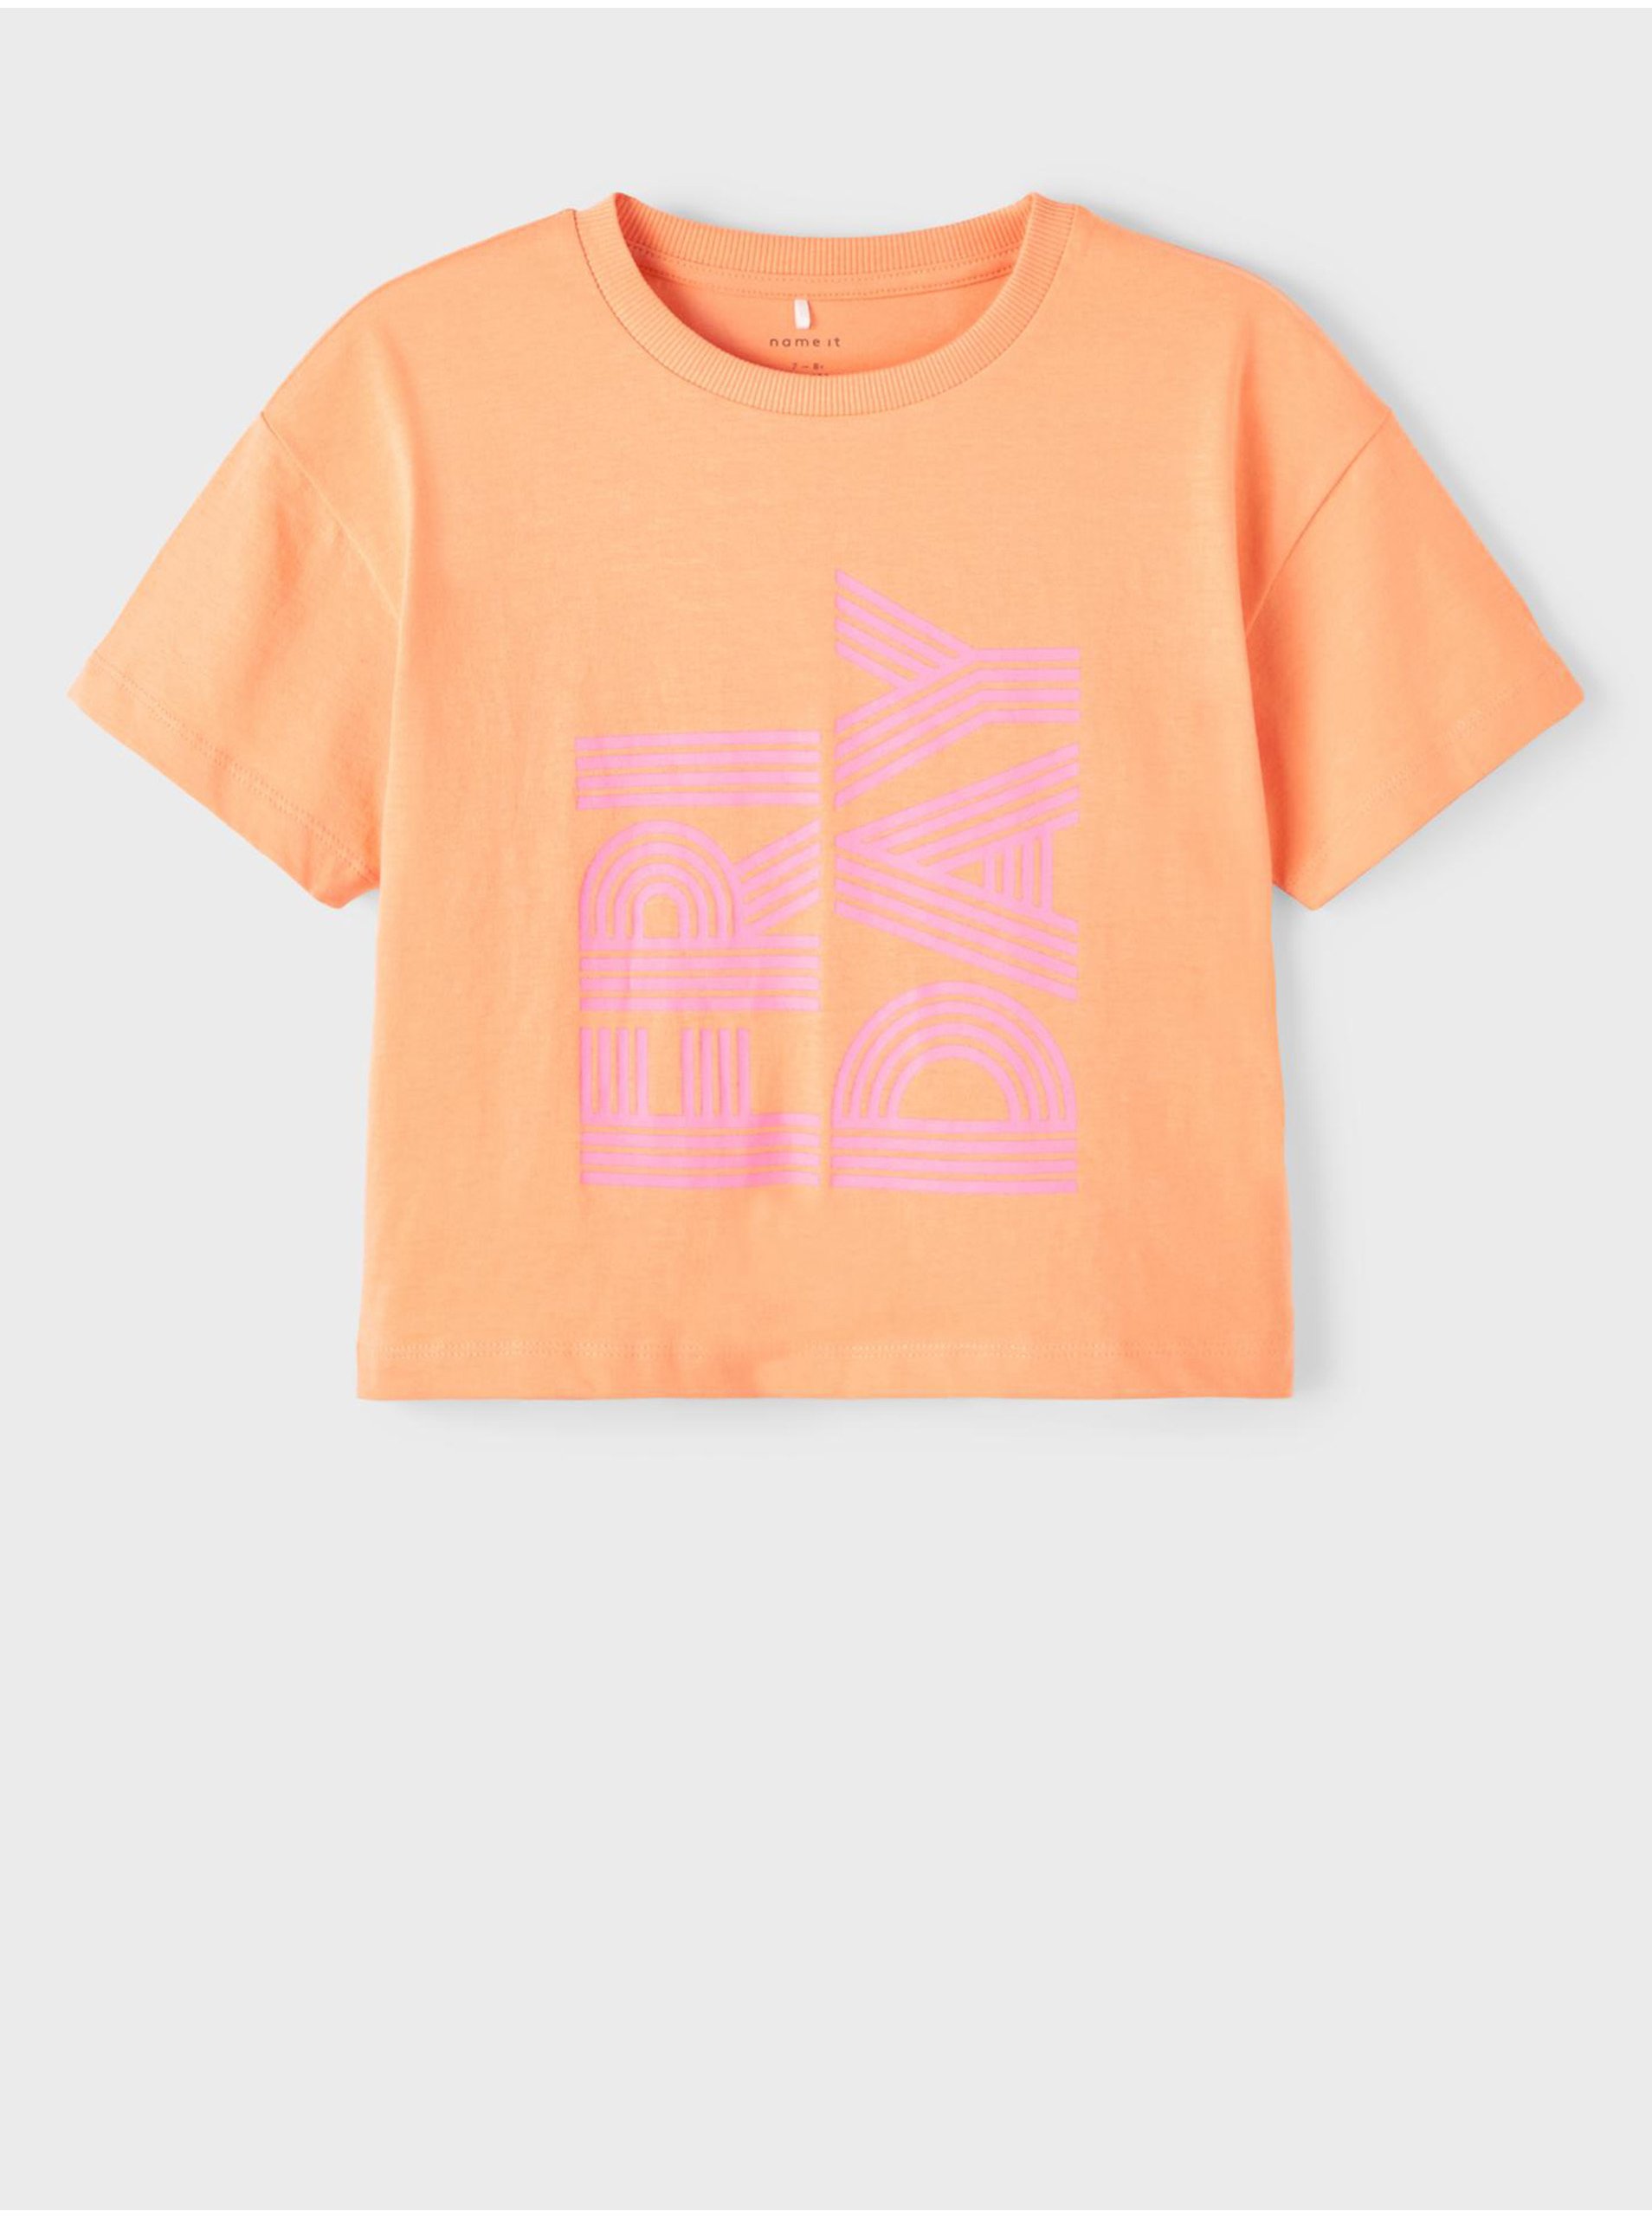 Lacno Oranžové dievčenské tričko name it Balone